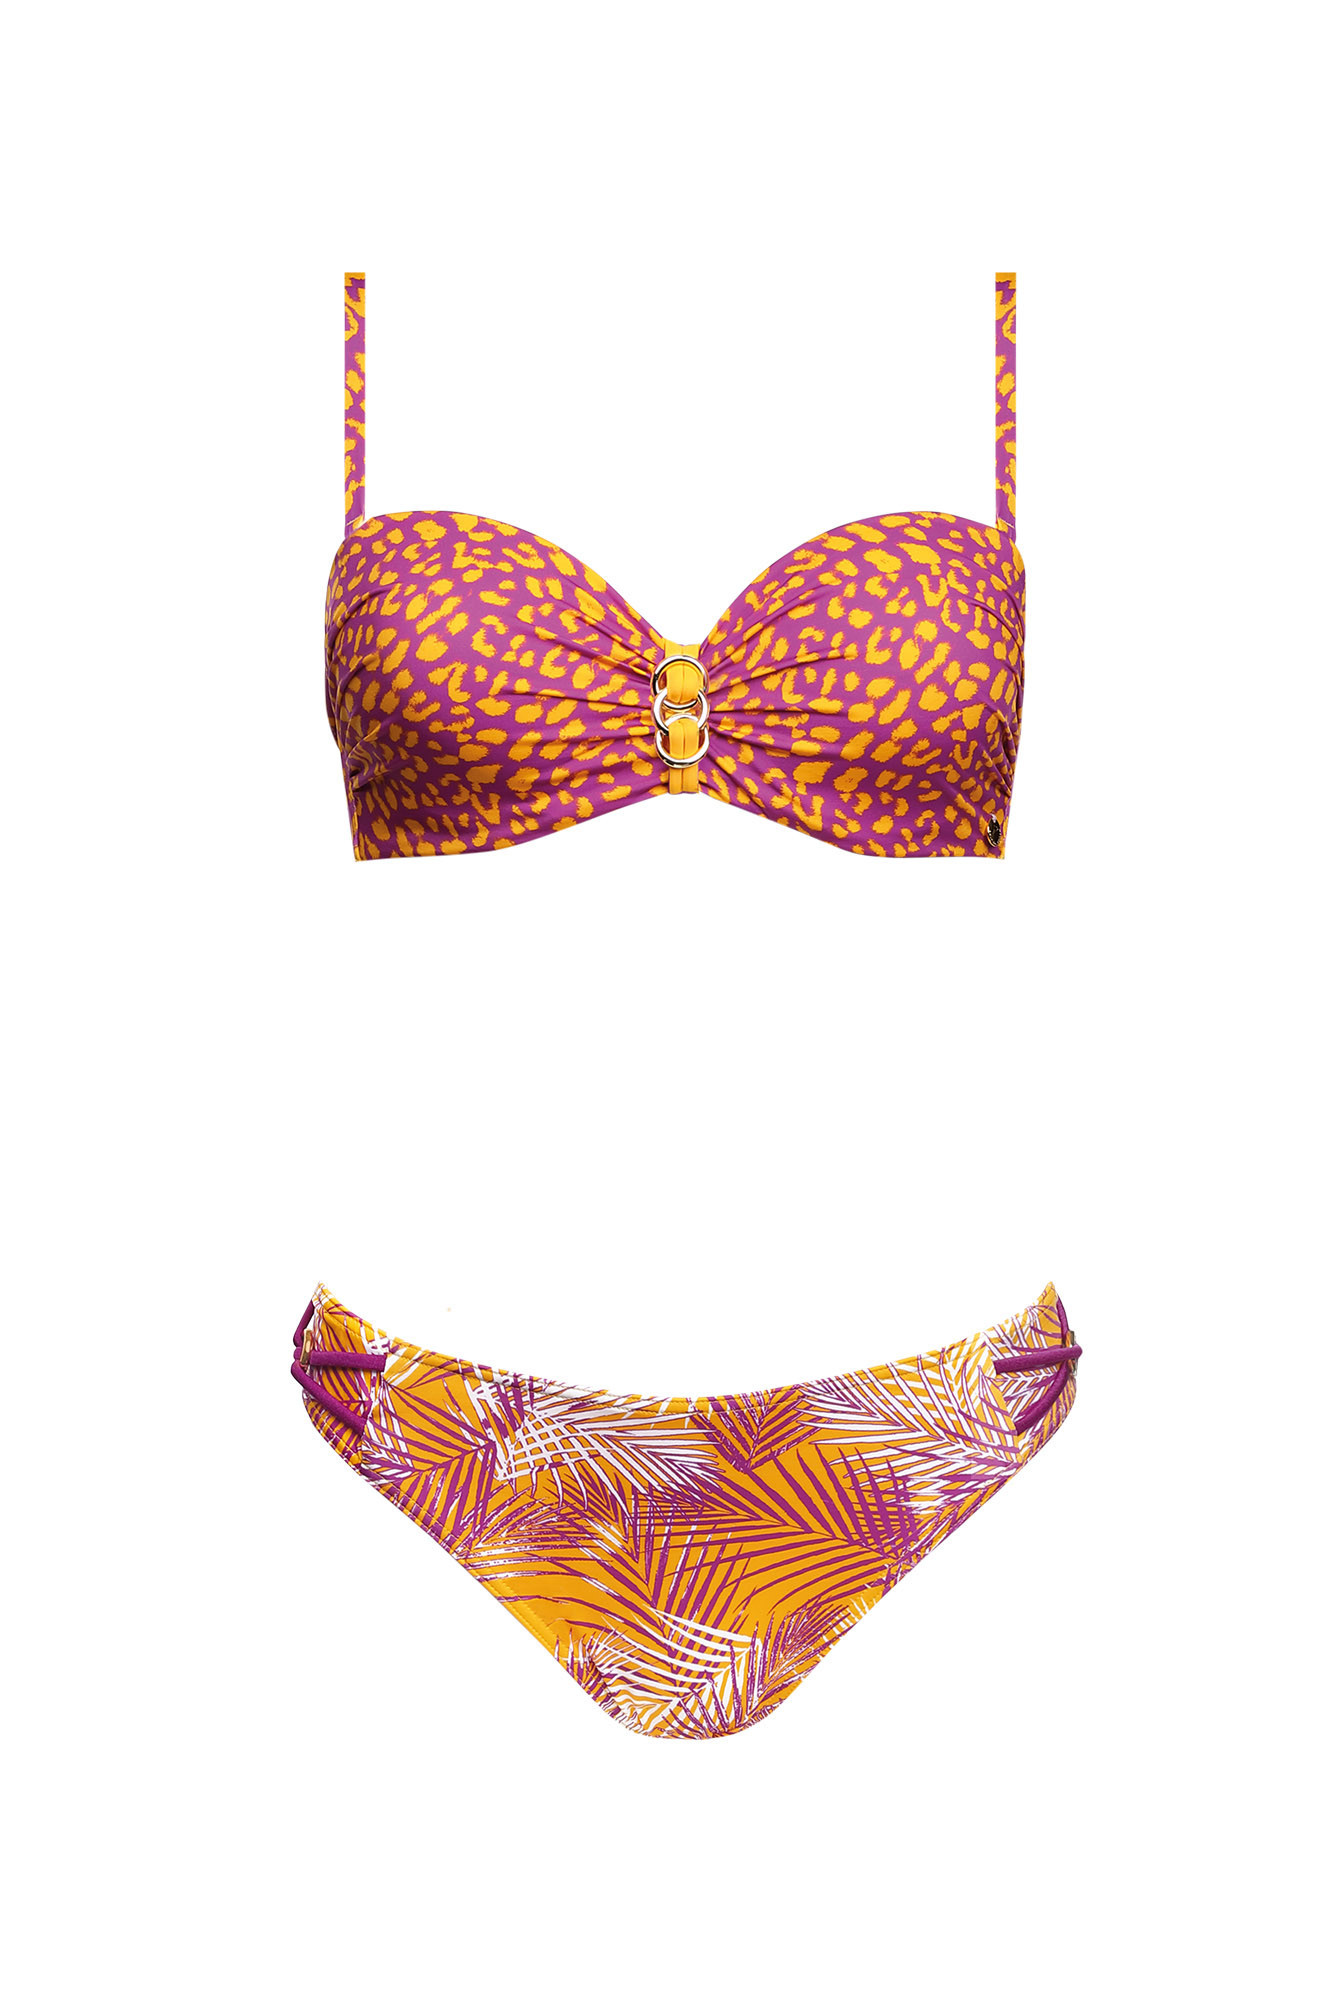 Dvojdílné plavky Paradise 2 S7300O22 - Self 40C oranžová-fialová